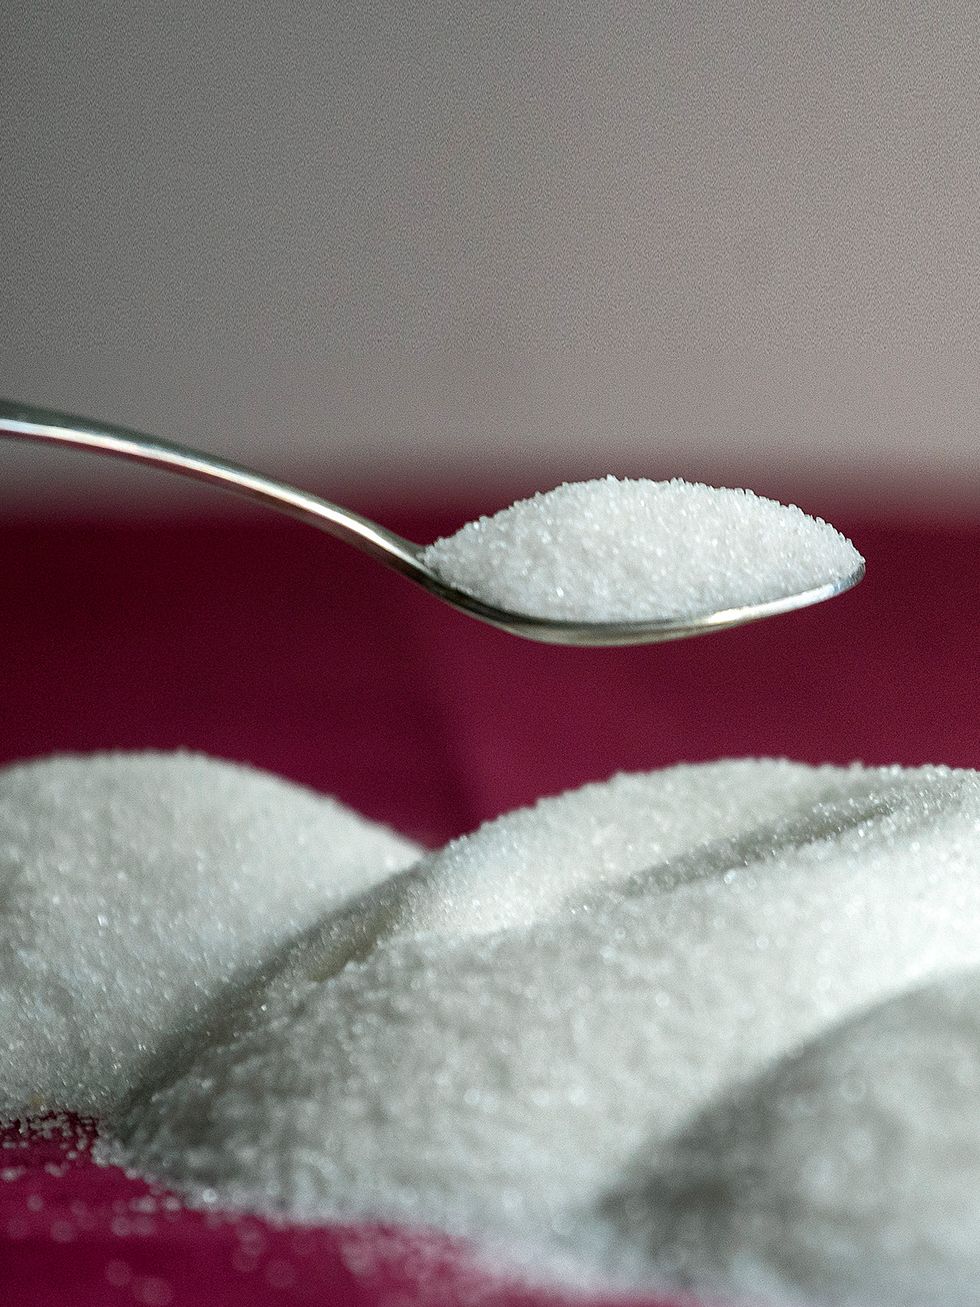 Water, Sugar, Table sugar, Close-up, Hand, Powdered sugar, Chemical compound, Spoon, Salt, Tableware, 